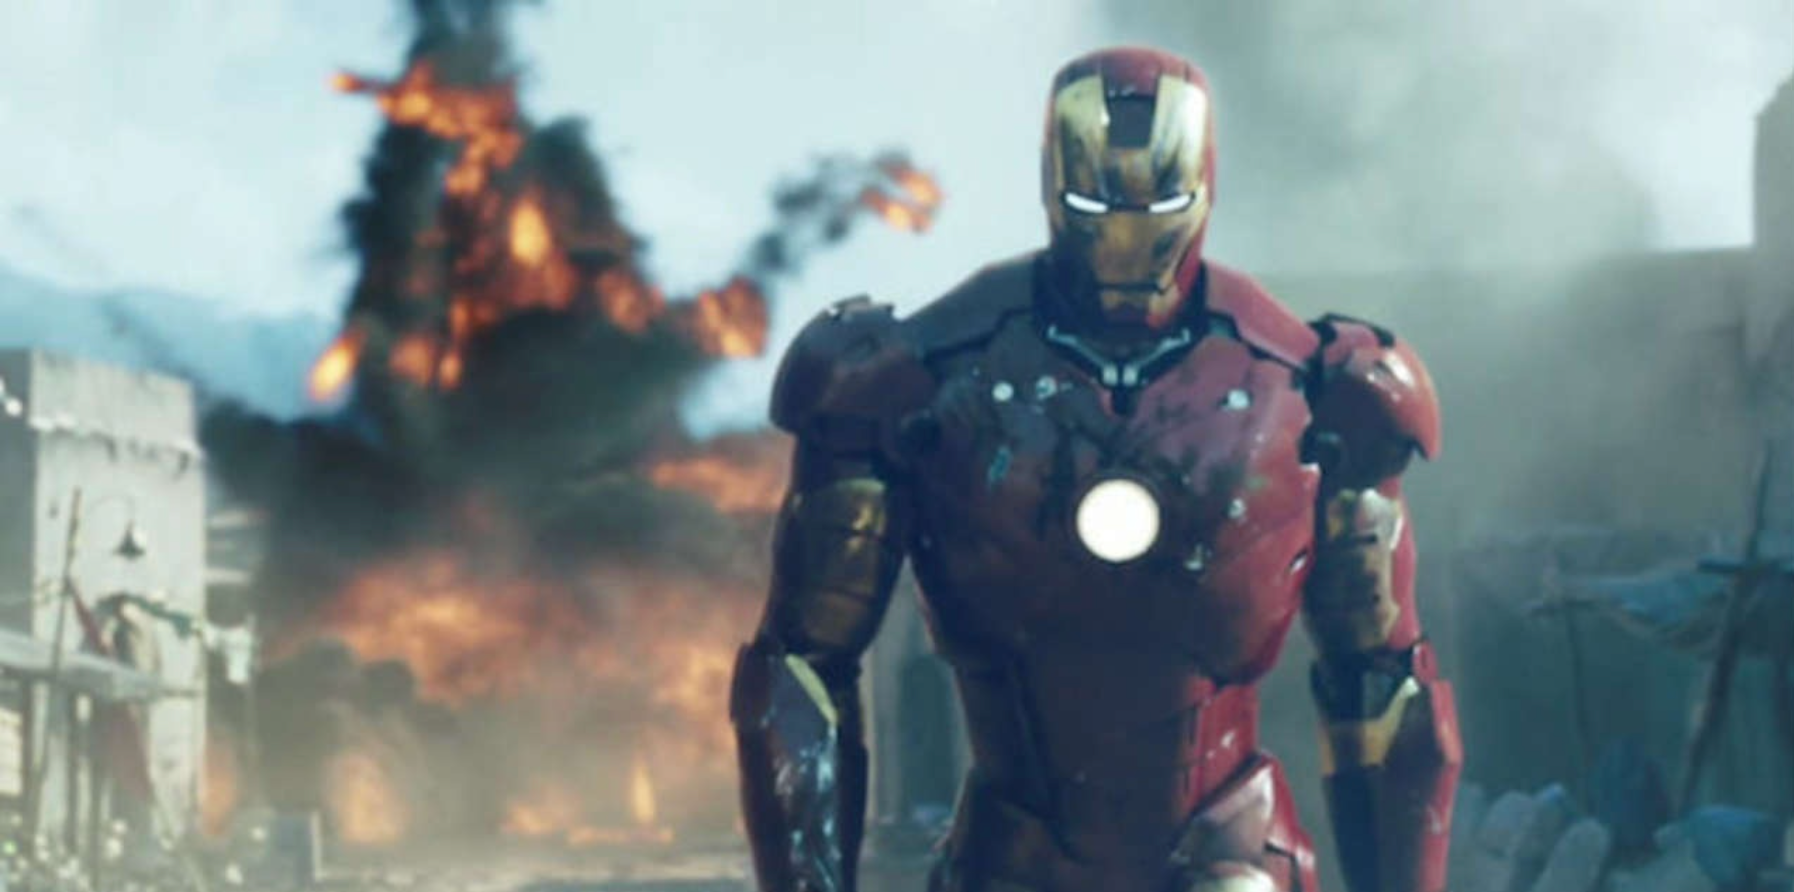 Iron Man in MCU walking away from explosion